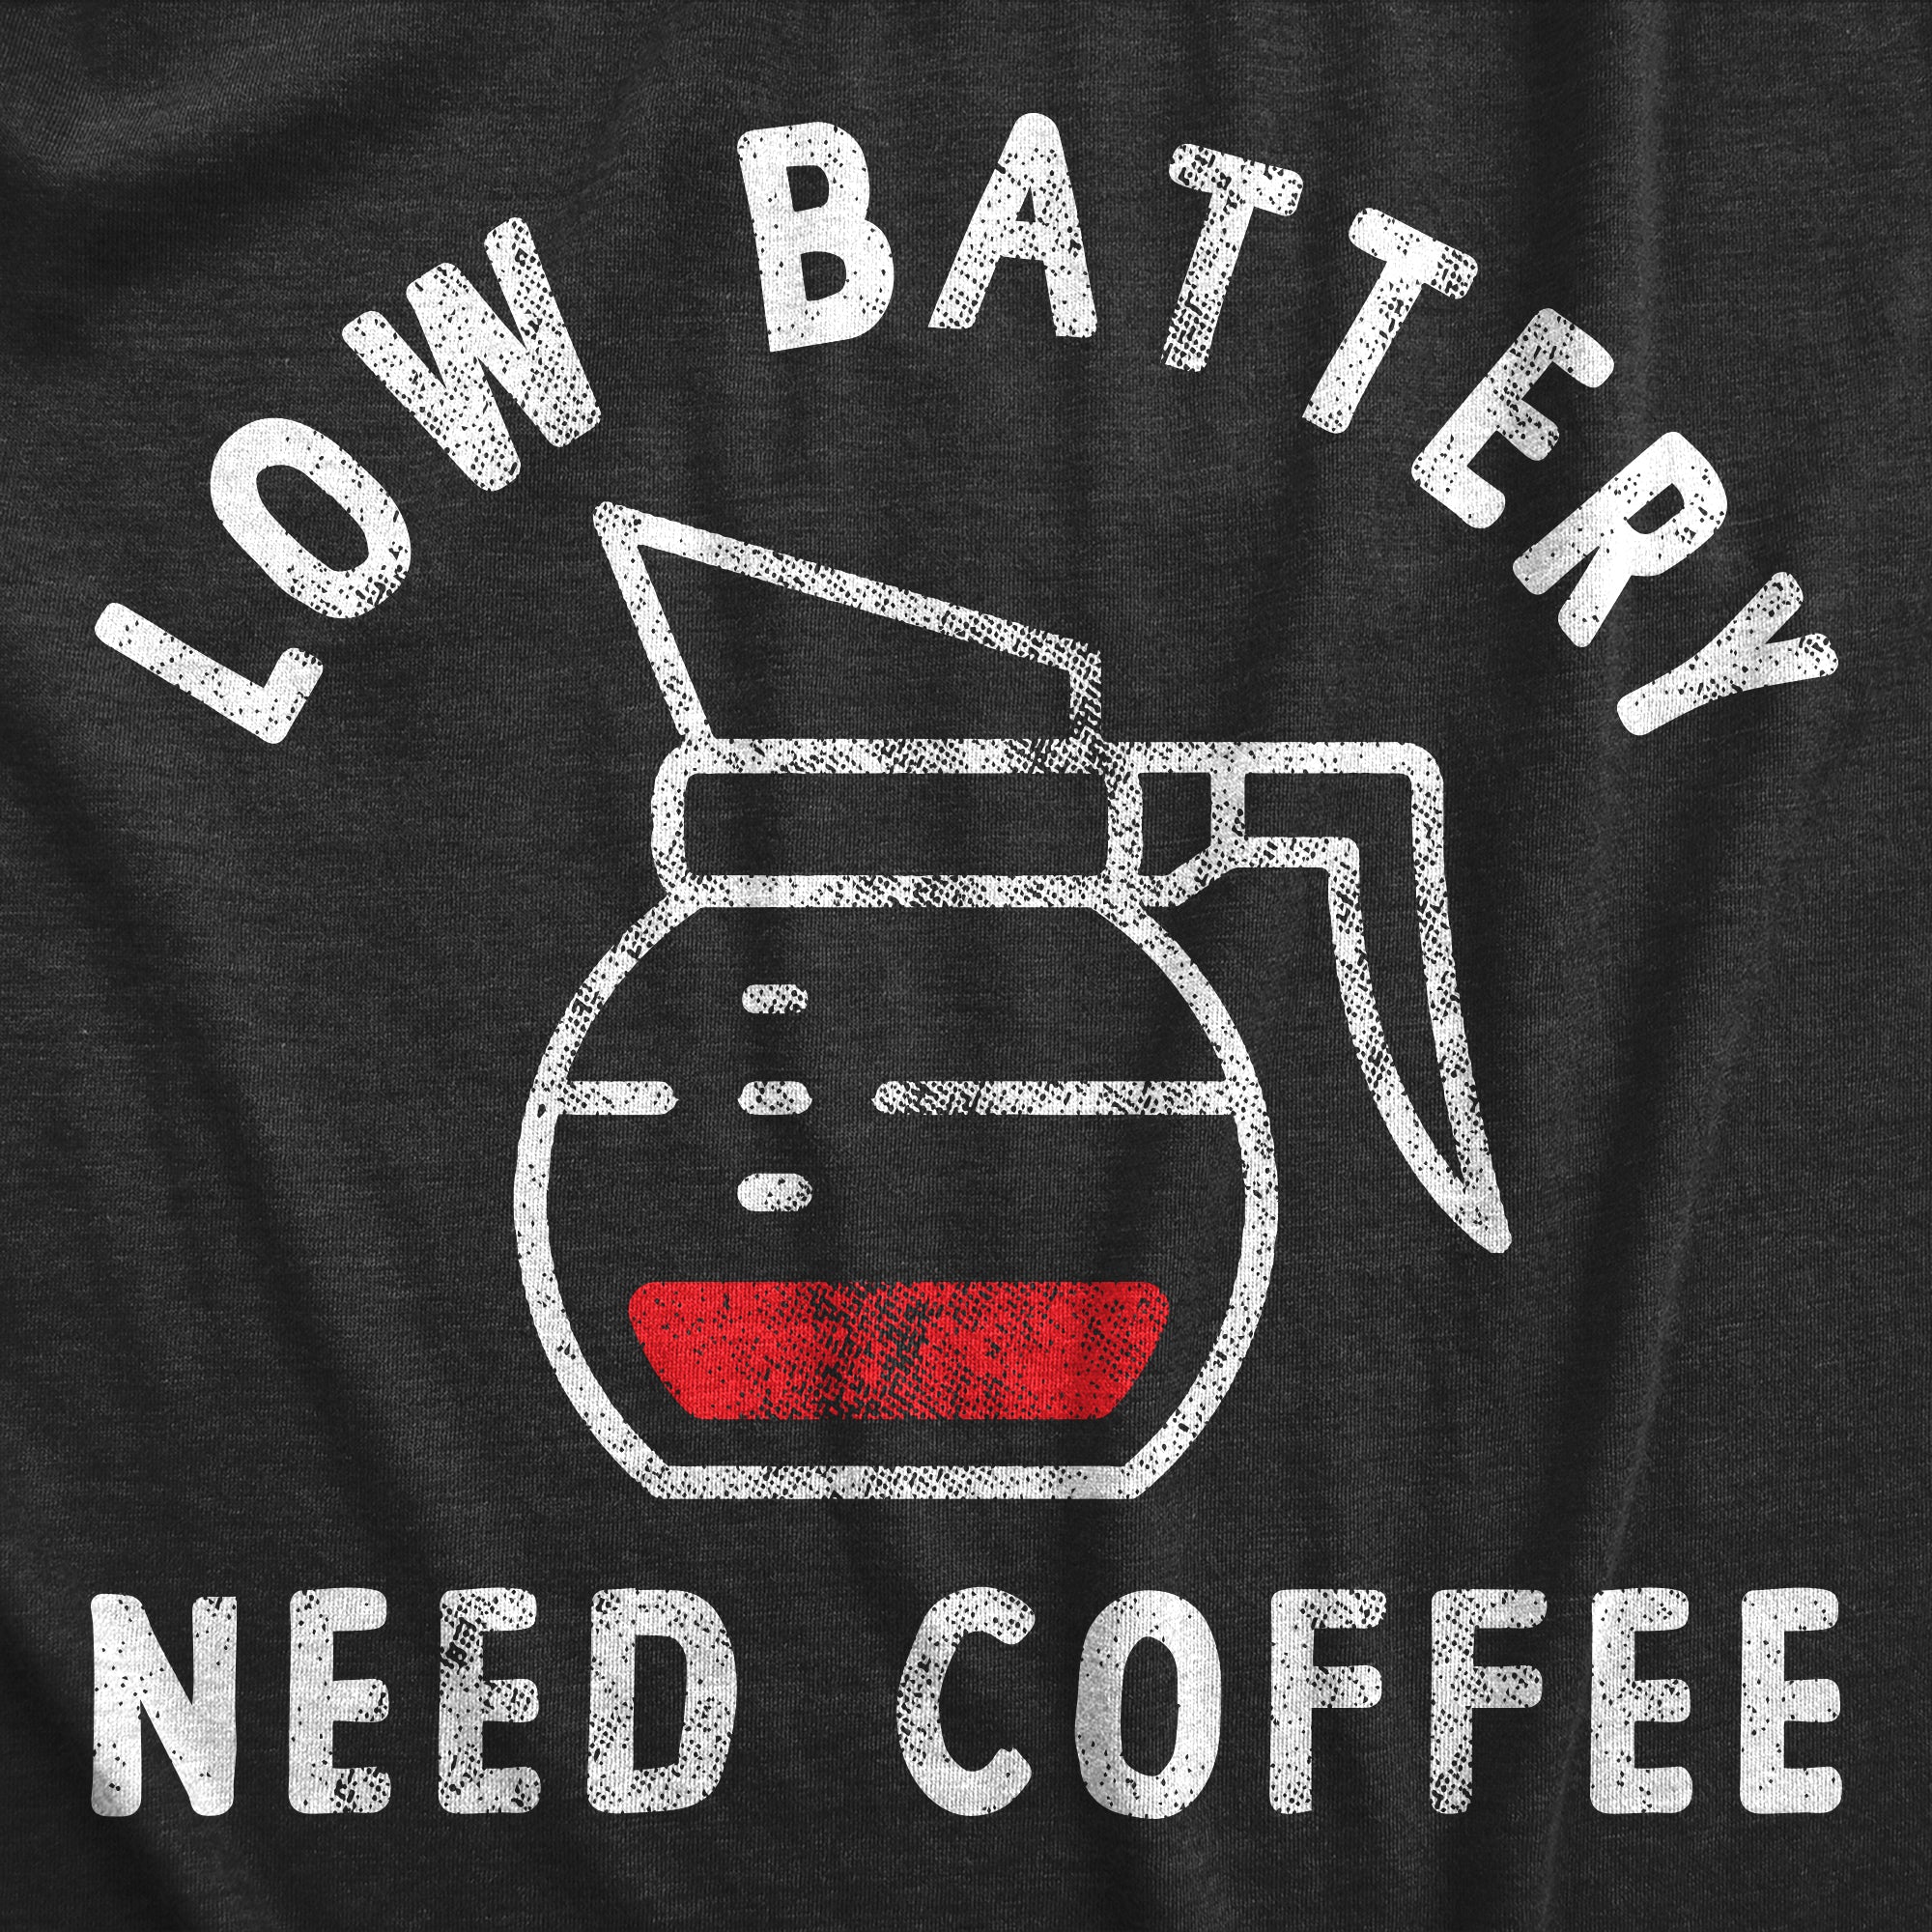 Funny Heather Black Low Battery Need Coffee Mens T Shirt Nerdy coffee Tee